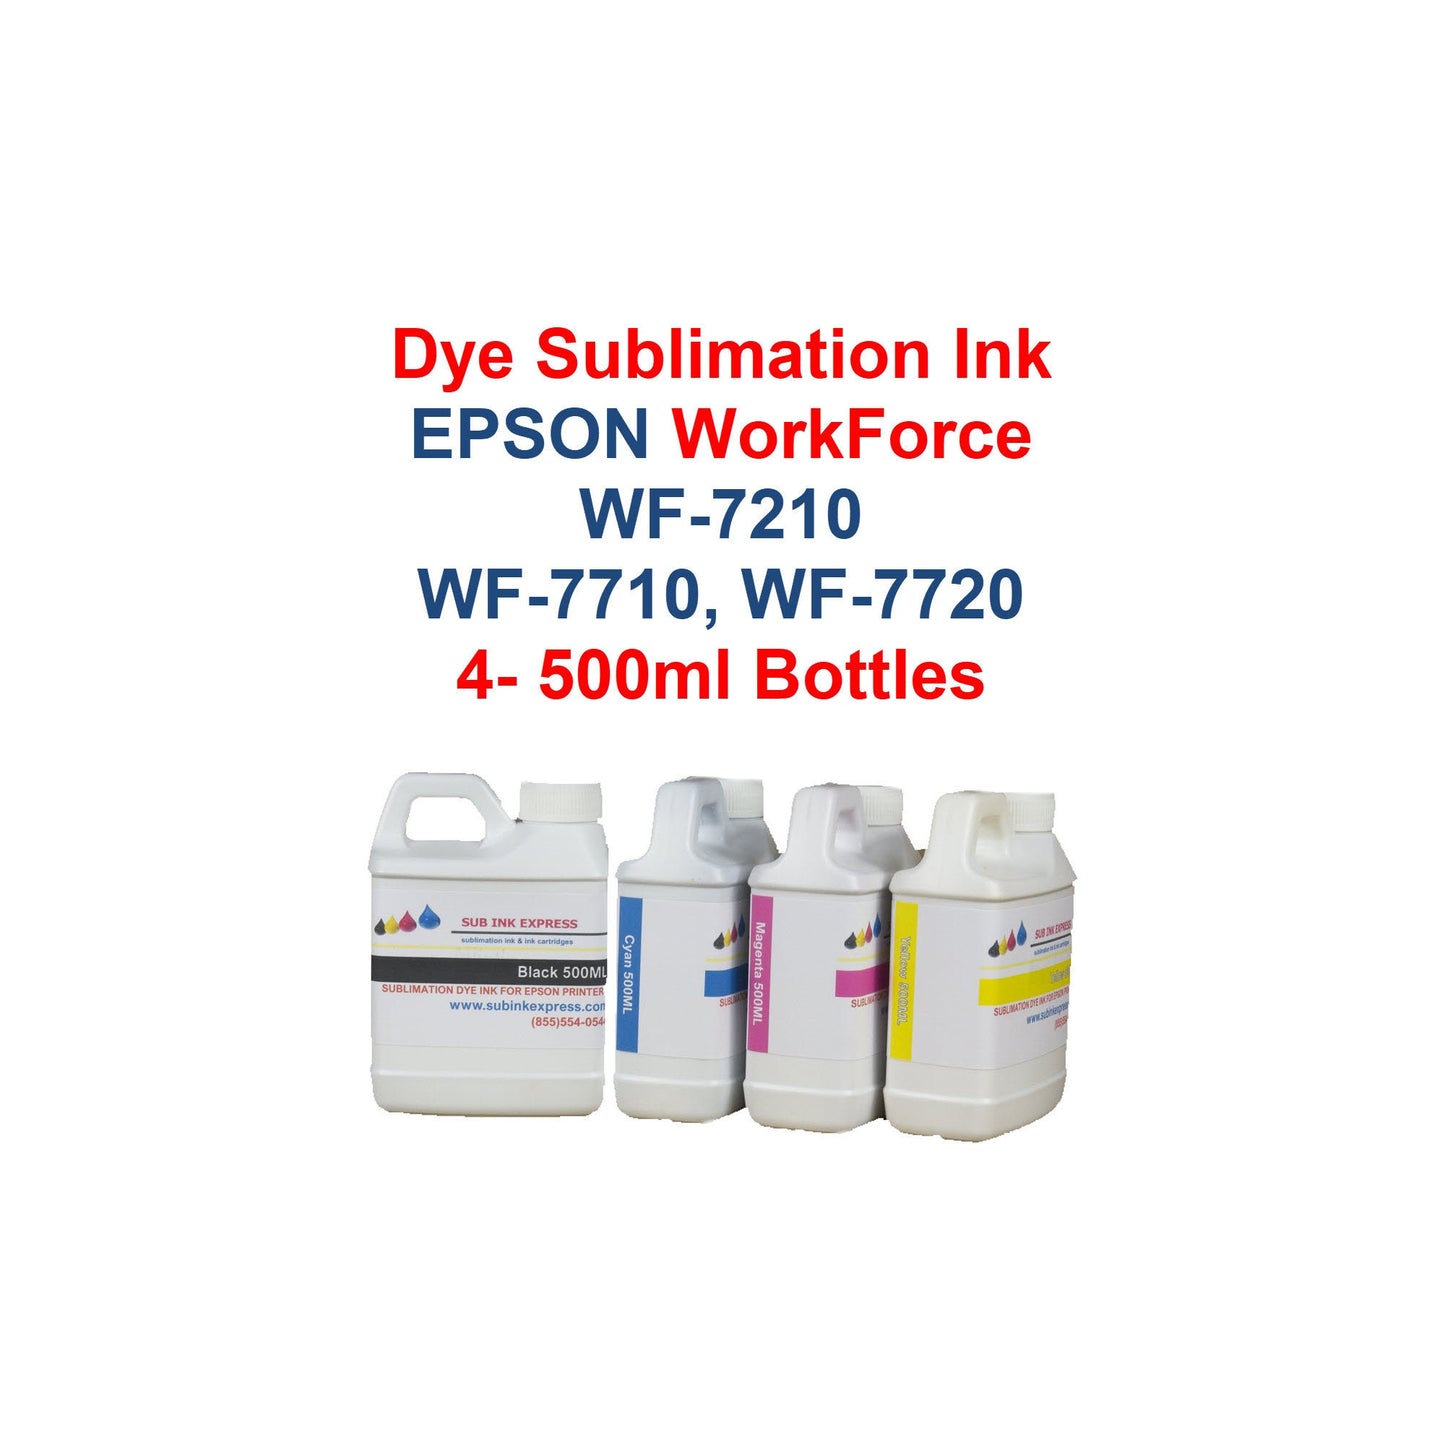 Dye Sublimation Ink 4 500ml Bottles For Epson Workforce Wf 7210 Wf 7 Subinkexpress 5853